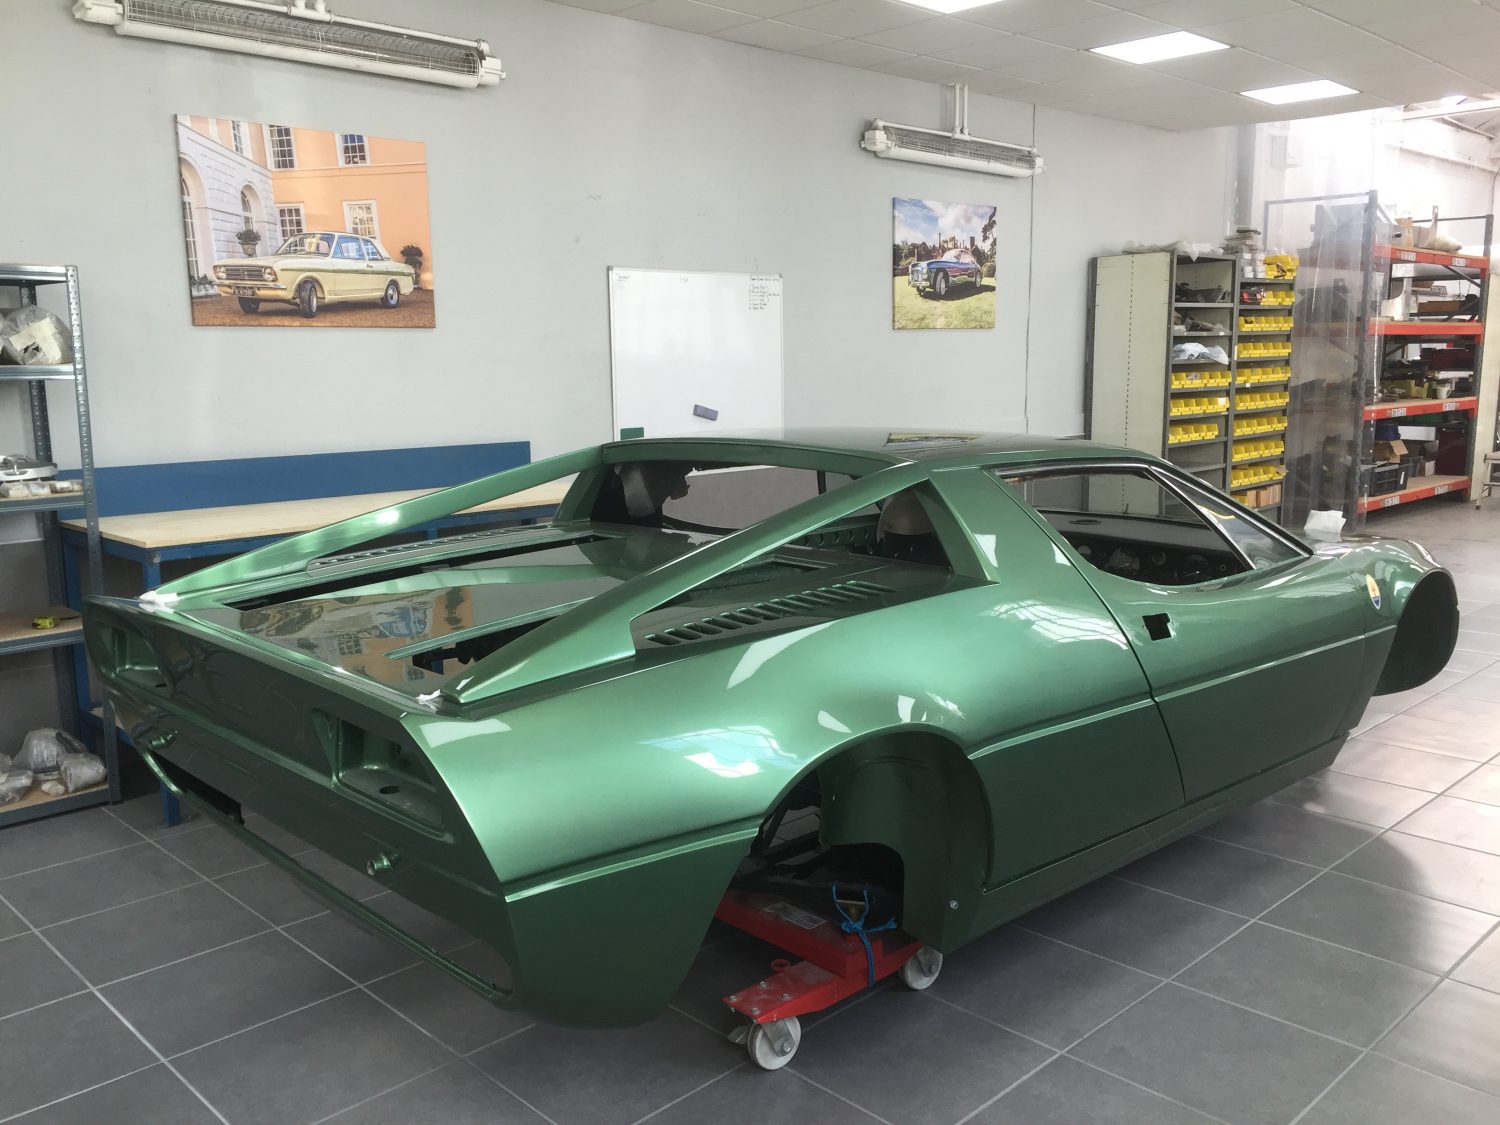 Maserati Merak in the tiled assembly room